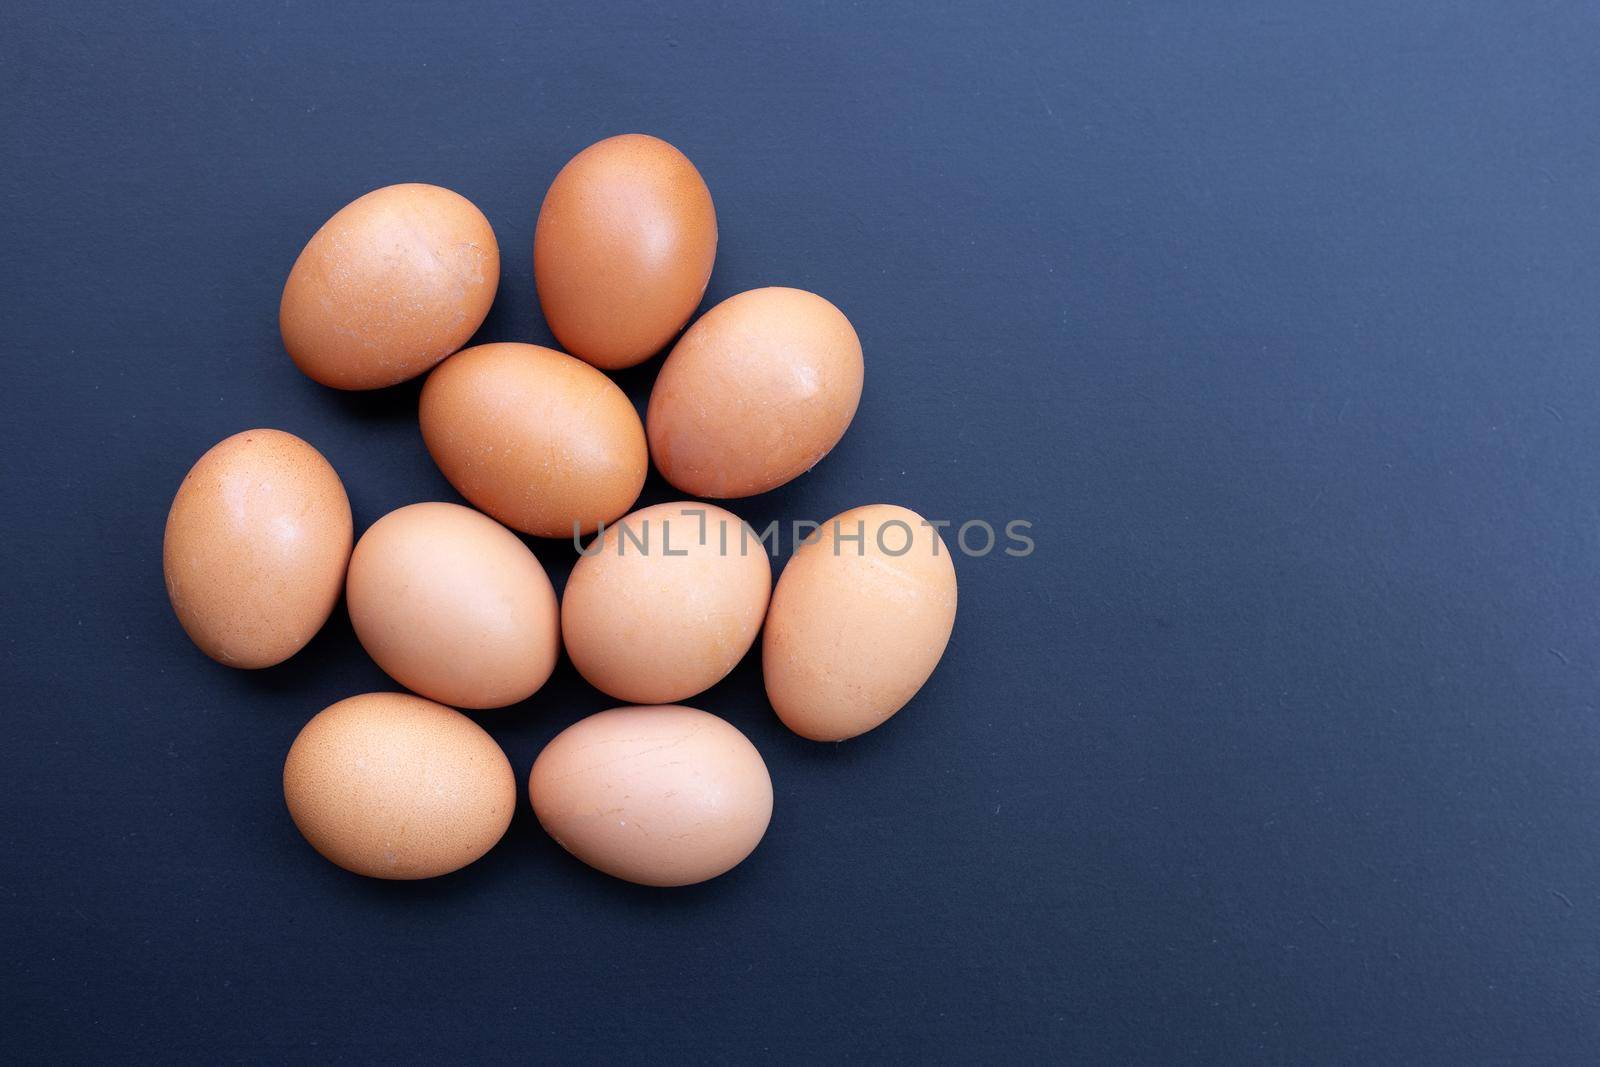 Eggs on dark background. Copy space